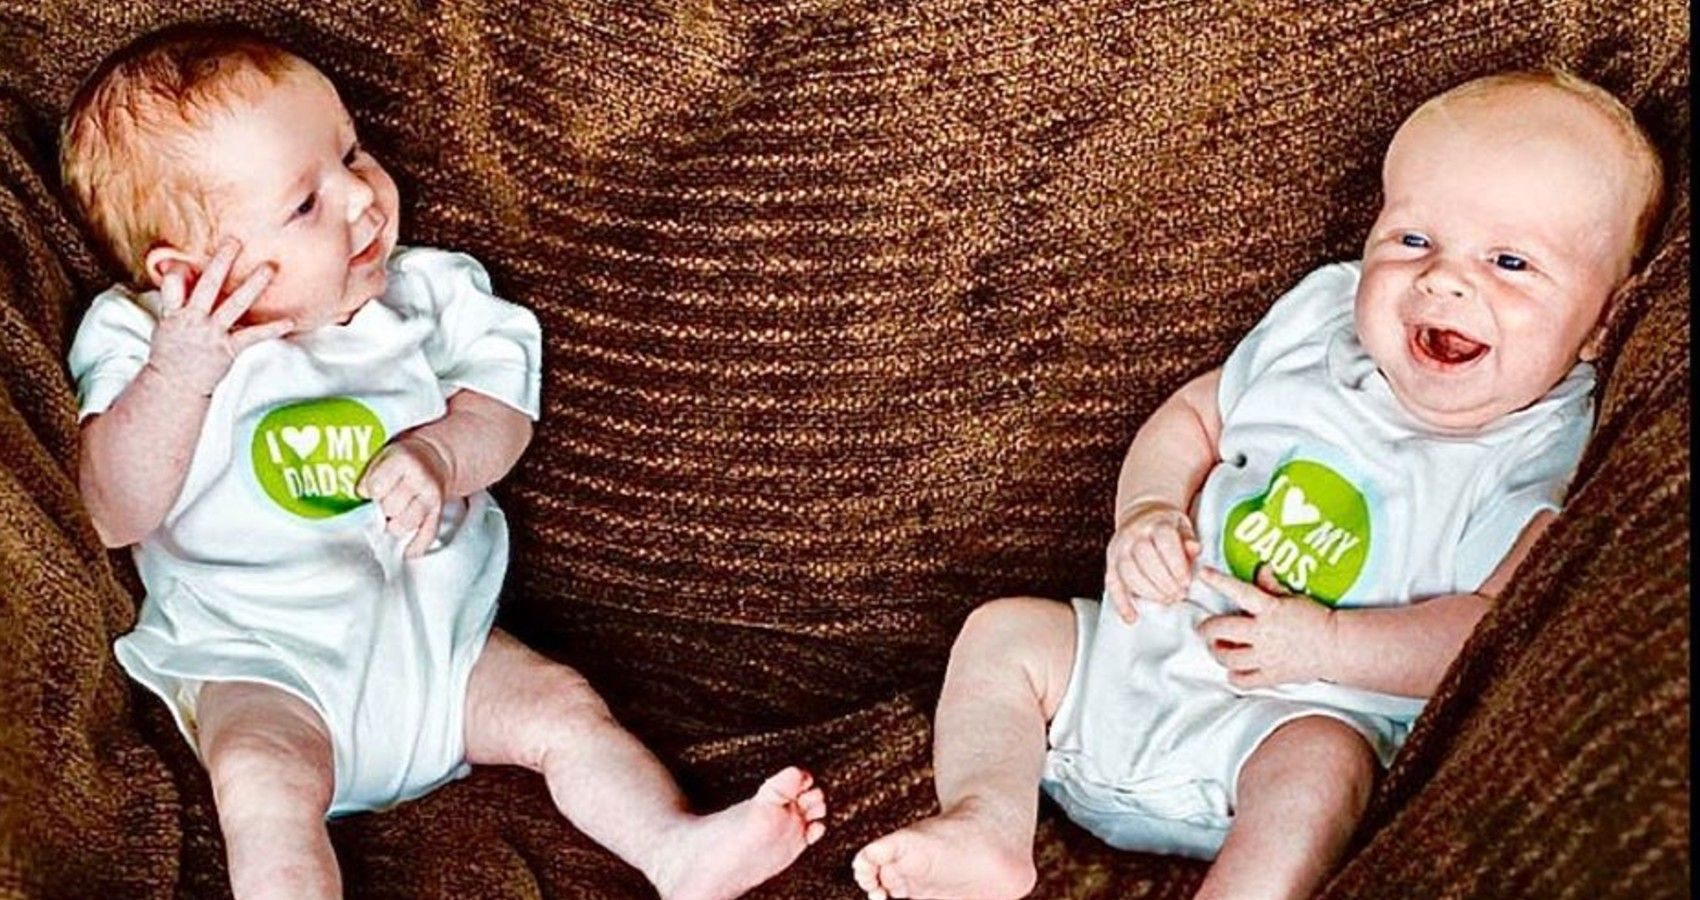 Neil Patrick Harris's twins when they were infants